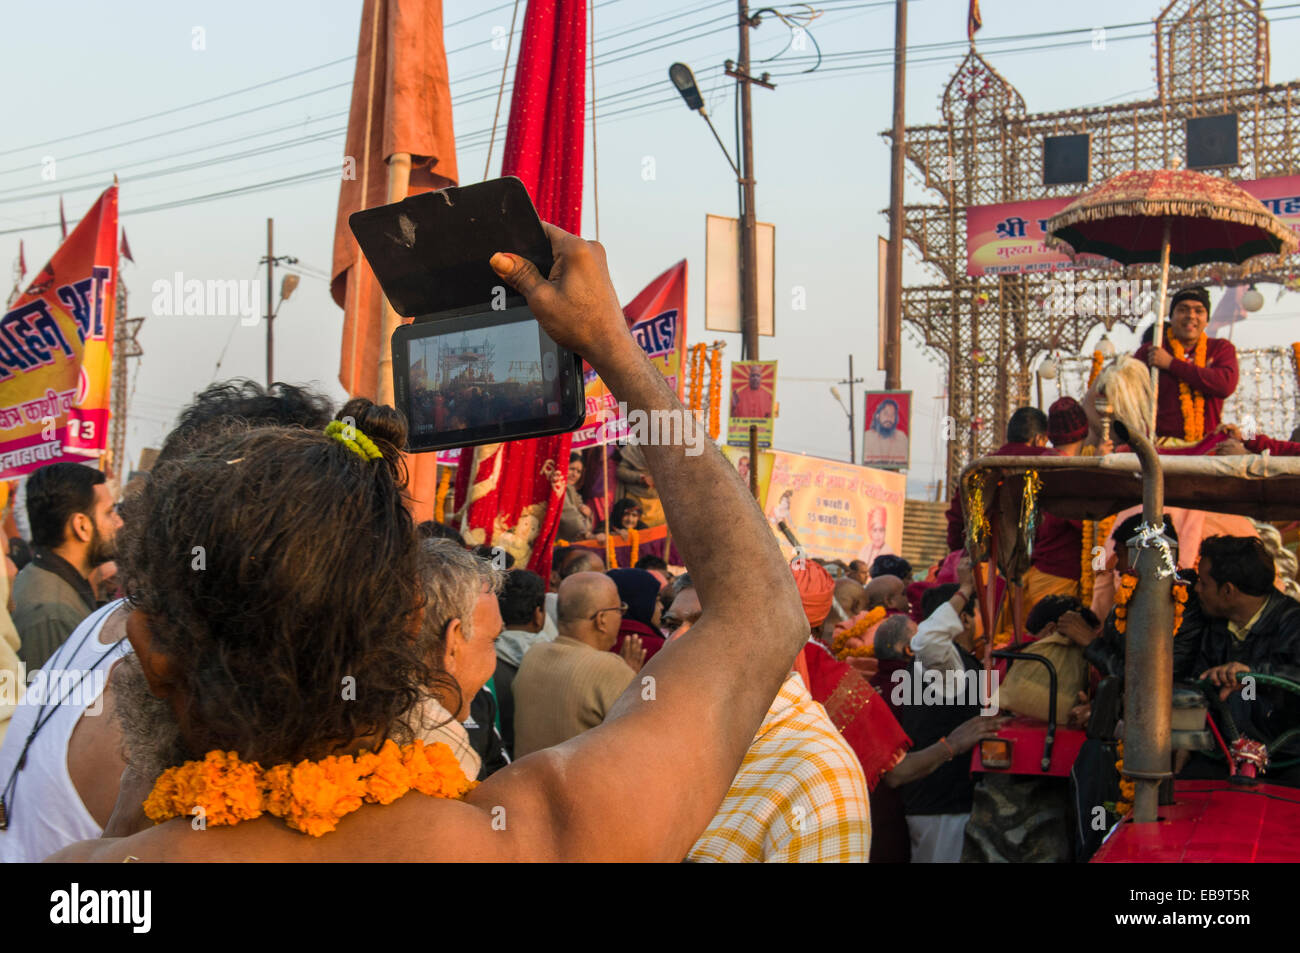 Sadhu, holy man, taking pictures at the Shahi Snan, the royal bath, during Kumbha Mela festival, Allahabad, Uttar Pradesh, India Stock Photo